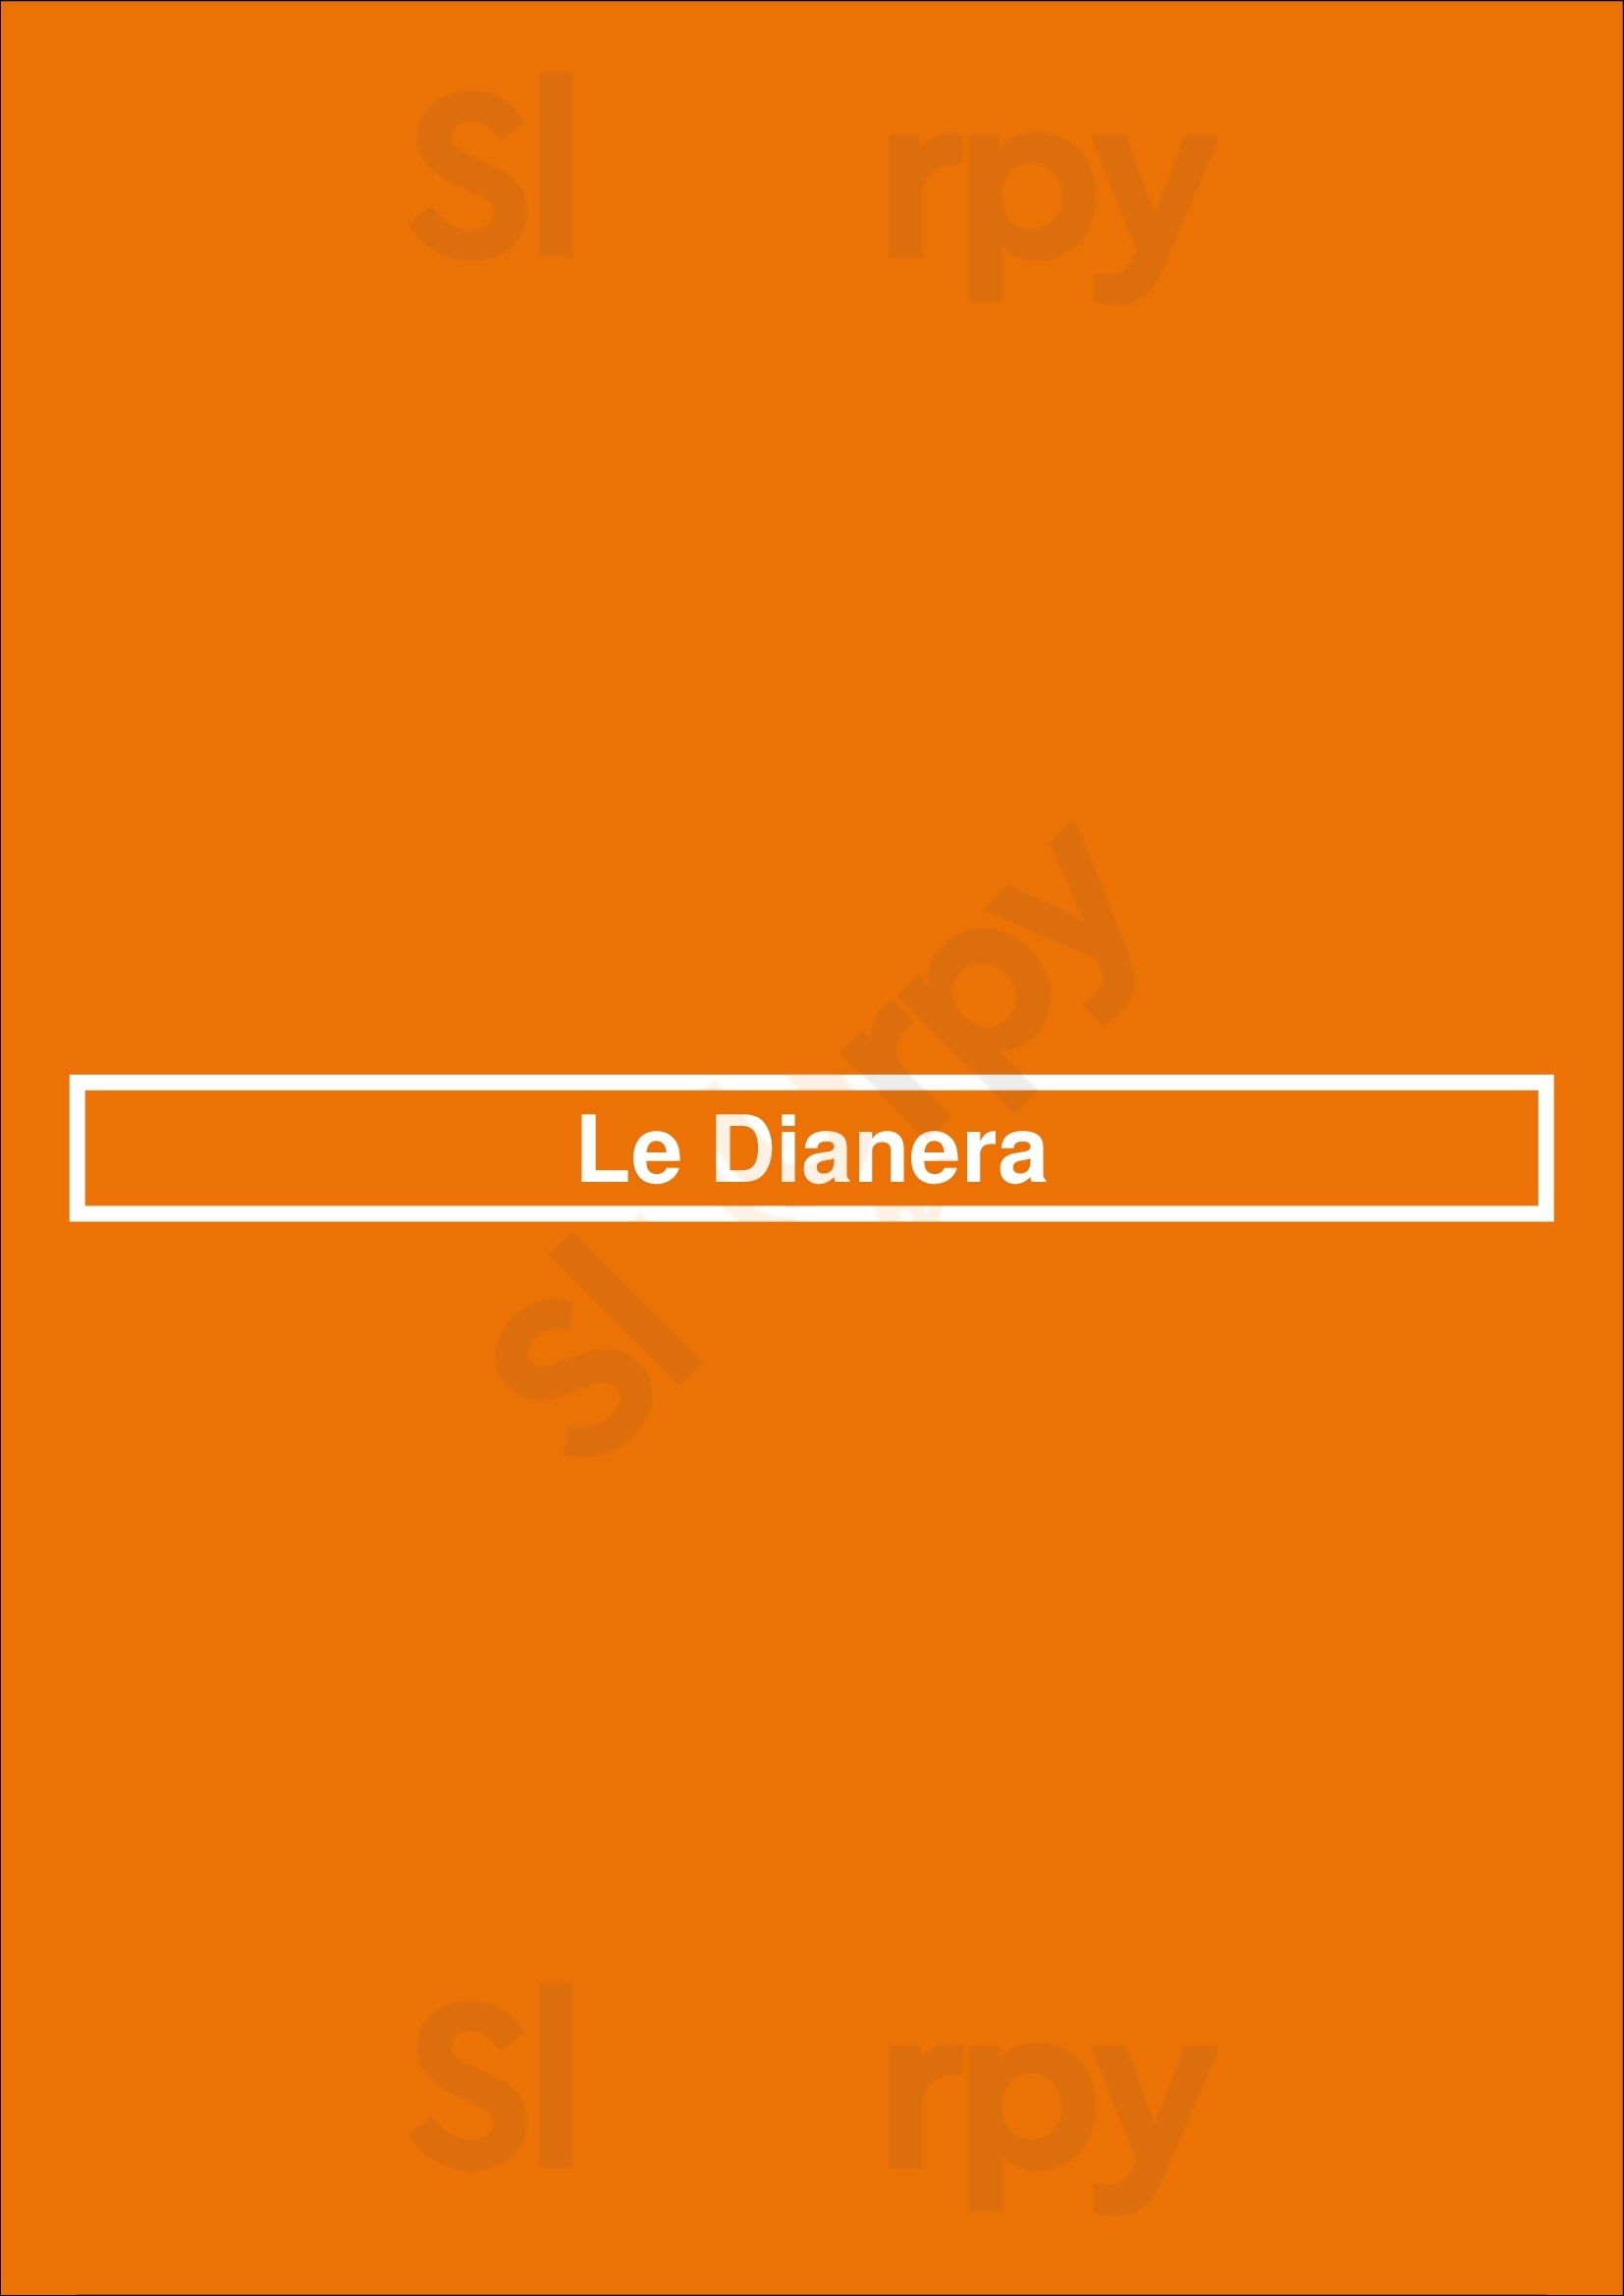 Le Dianera Paris Menu - 1